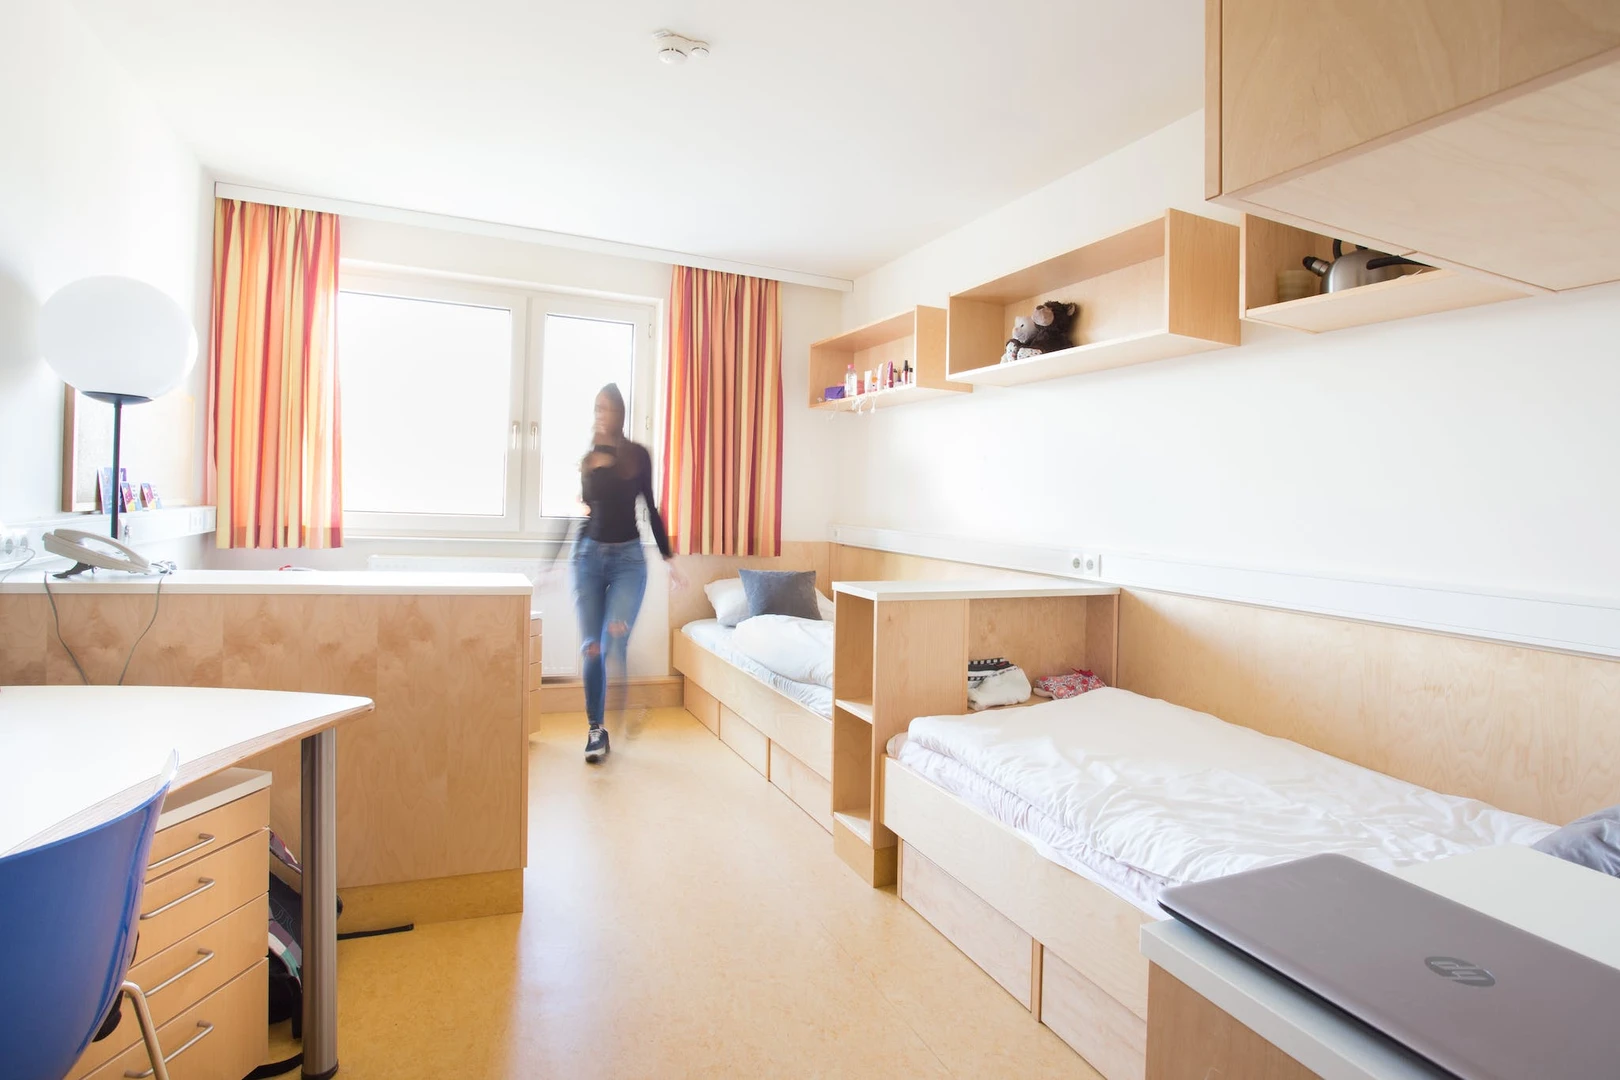 Shared room in 3-bedroom flat Vienna